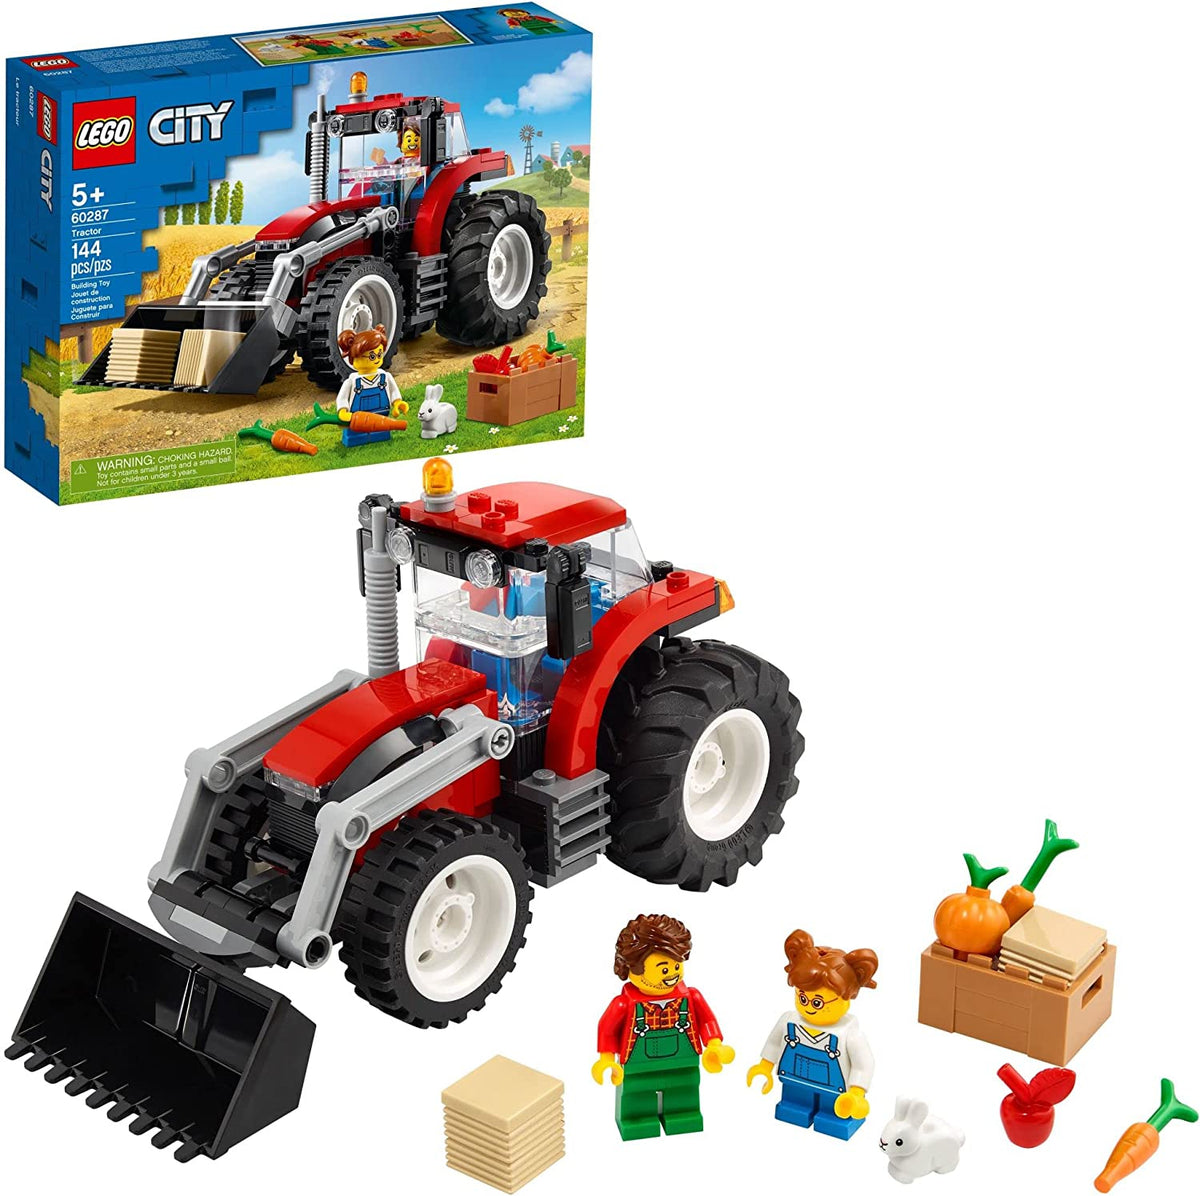 CITY 60287: Tractor